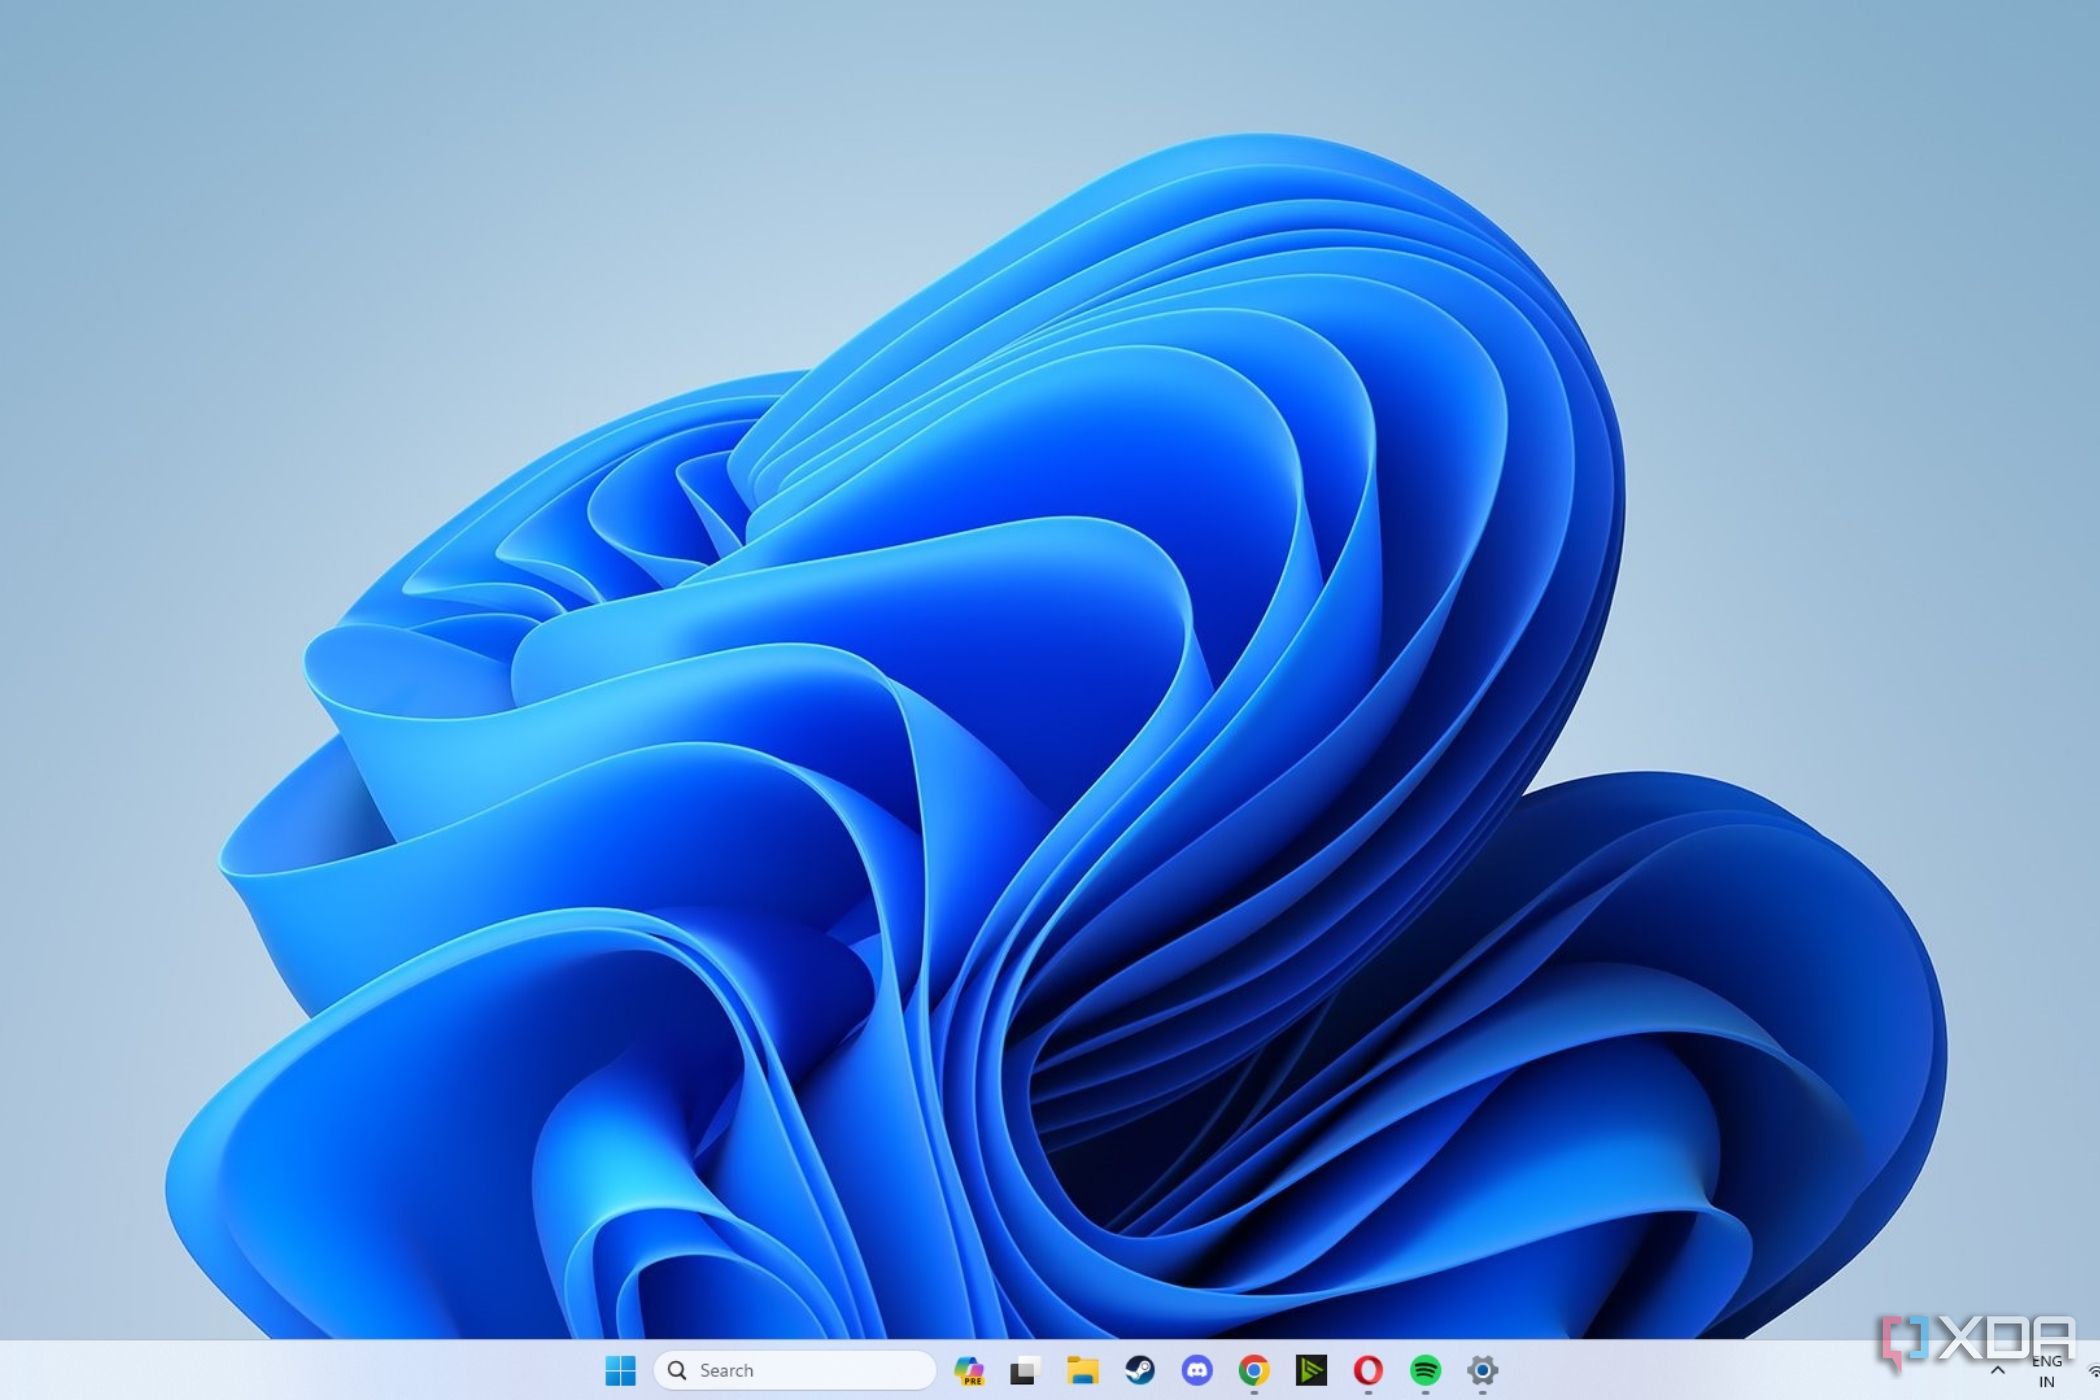 A screenshot showing the Windows 11 wallpaper.